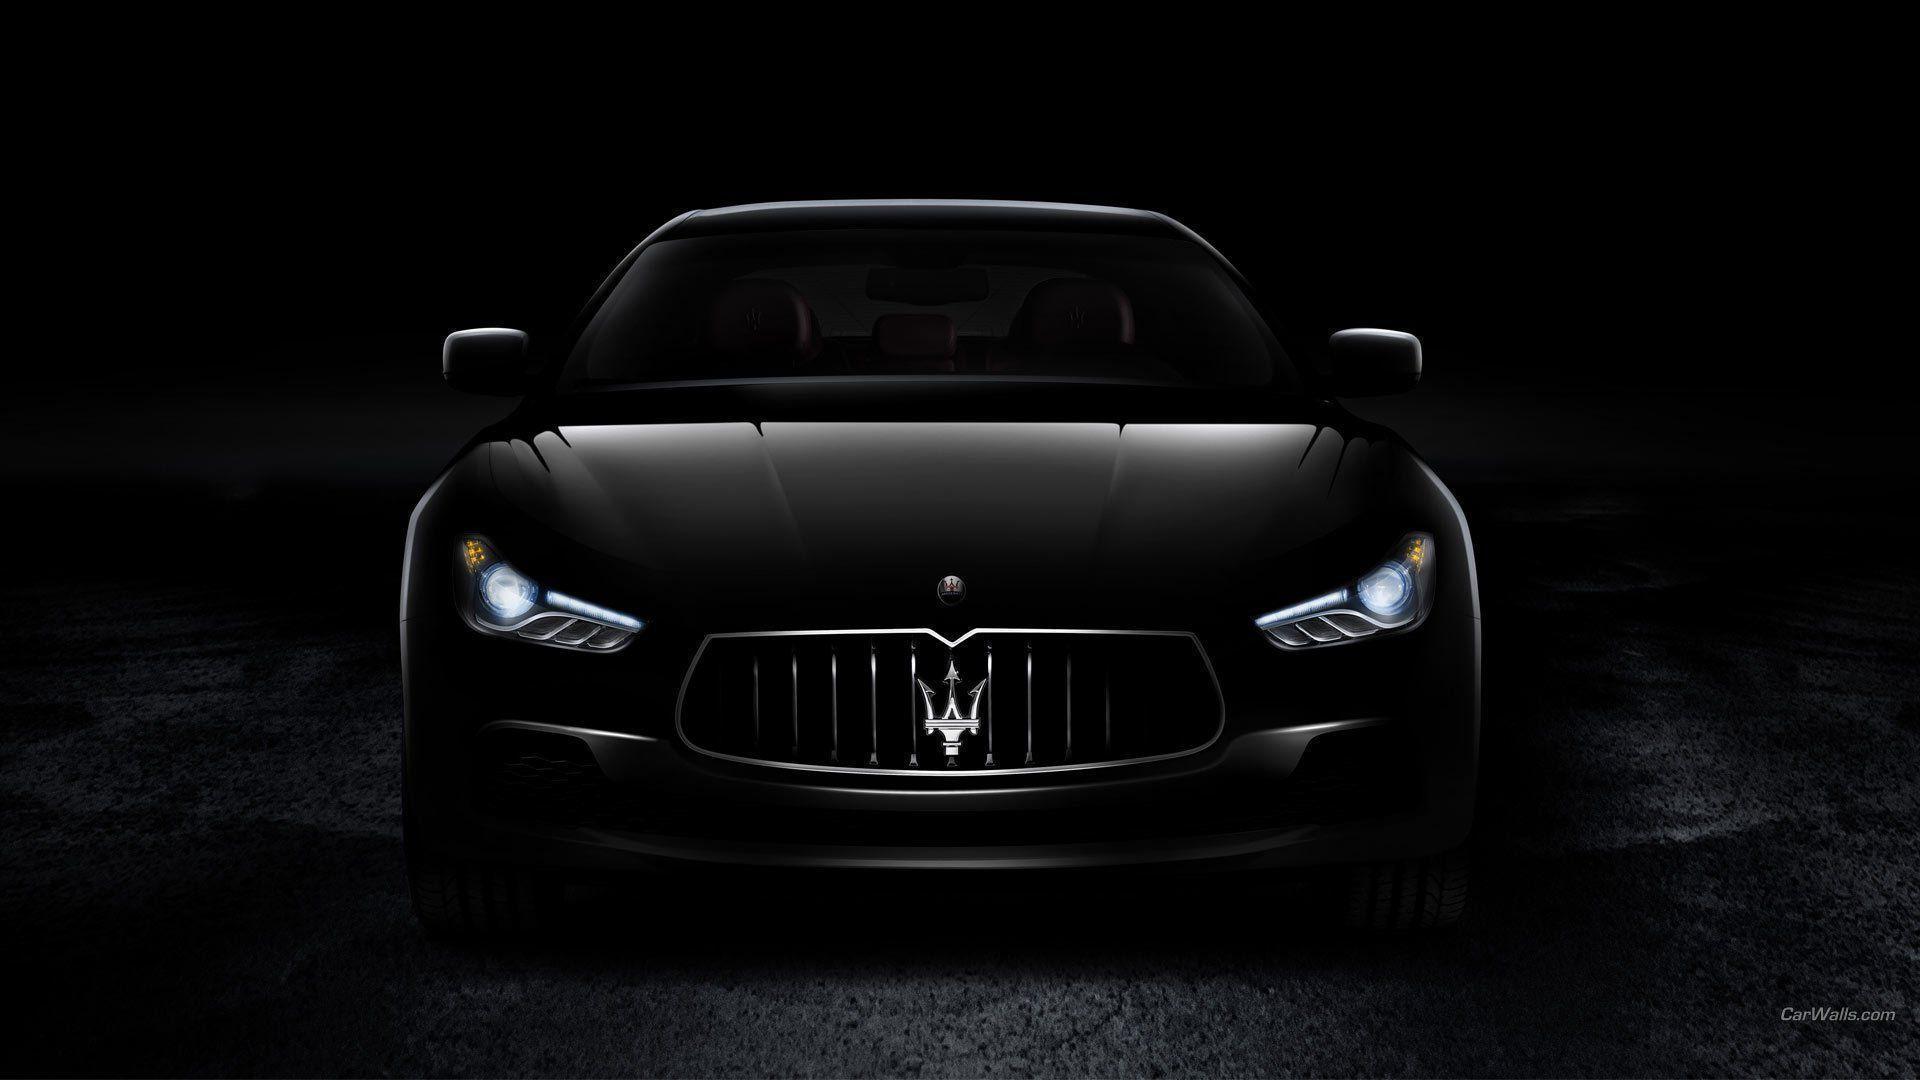 Maserati Ghibli HD Wallpaper and Background Image